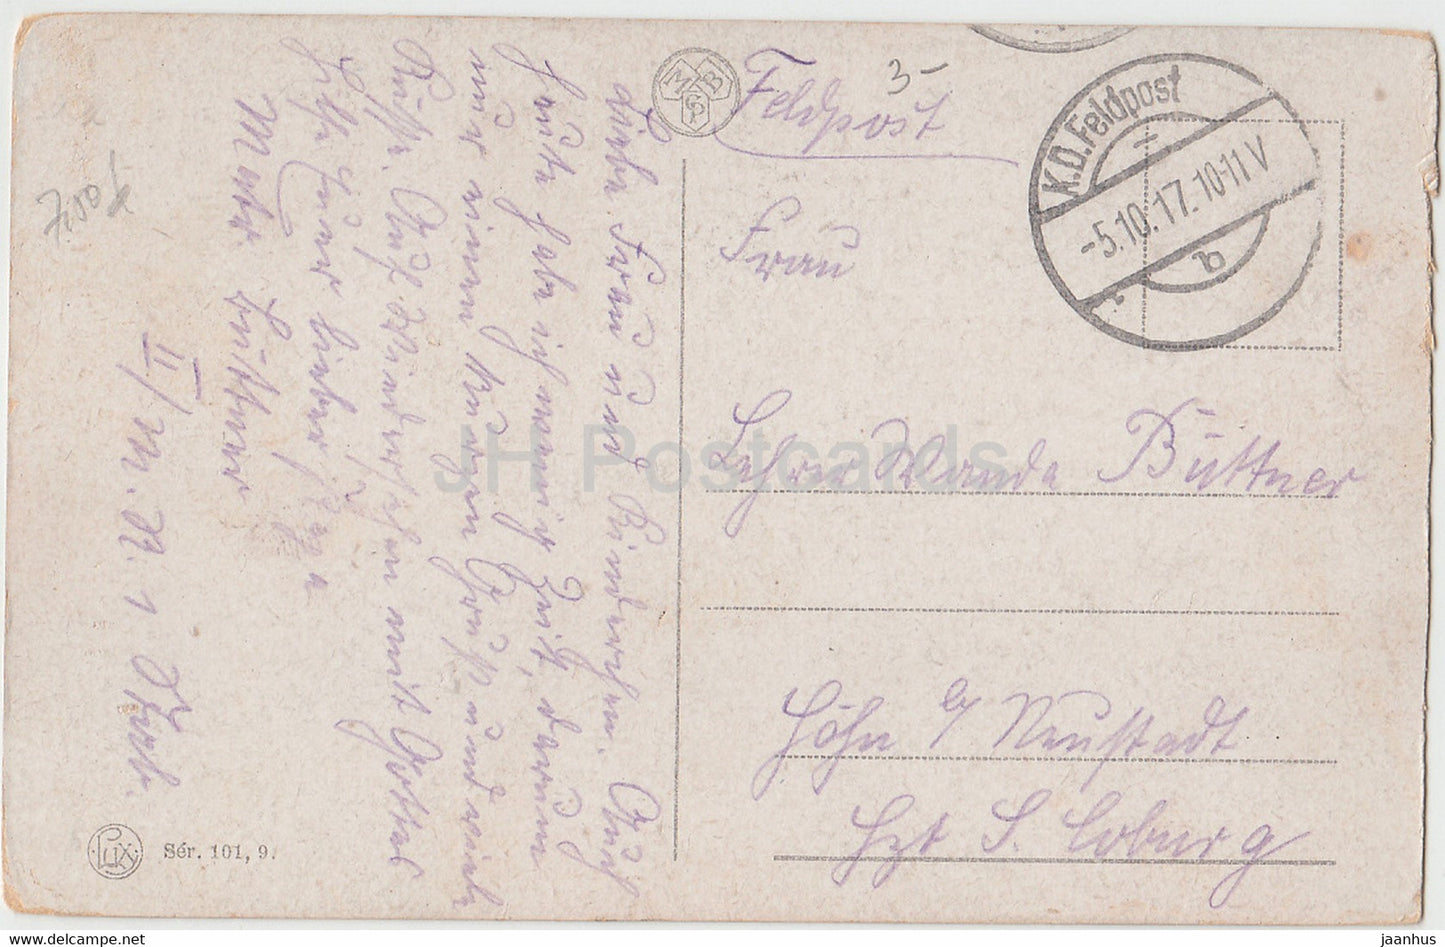 Bruges - Brugge - Chapelle de Saint Sang - Feldpost - old postcard - 1917 - Belgium - used